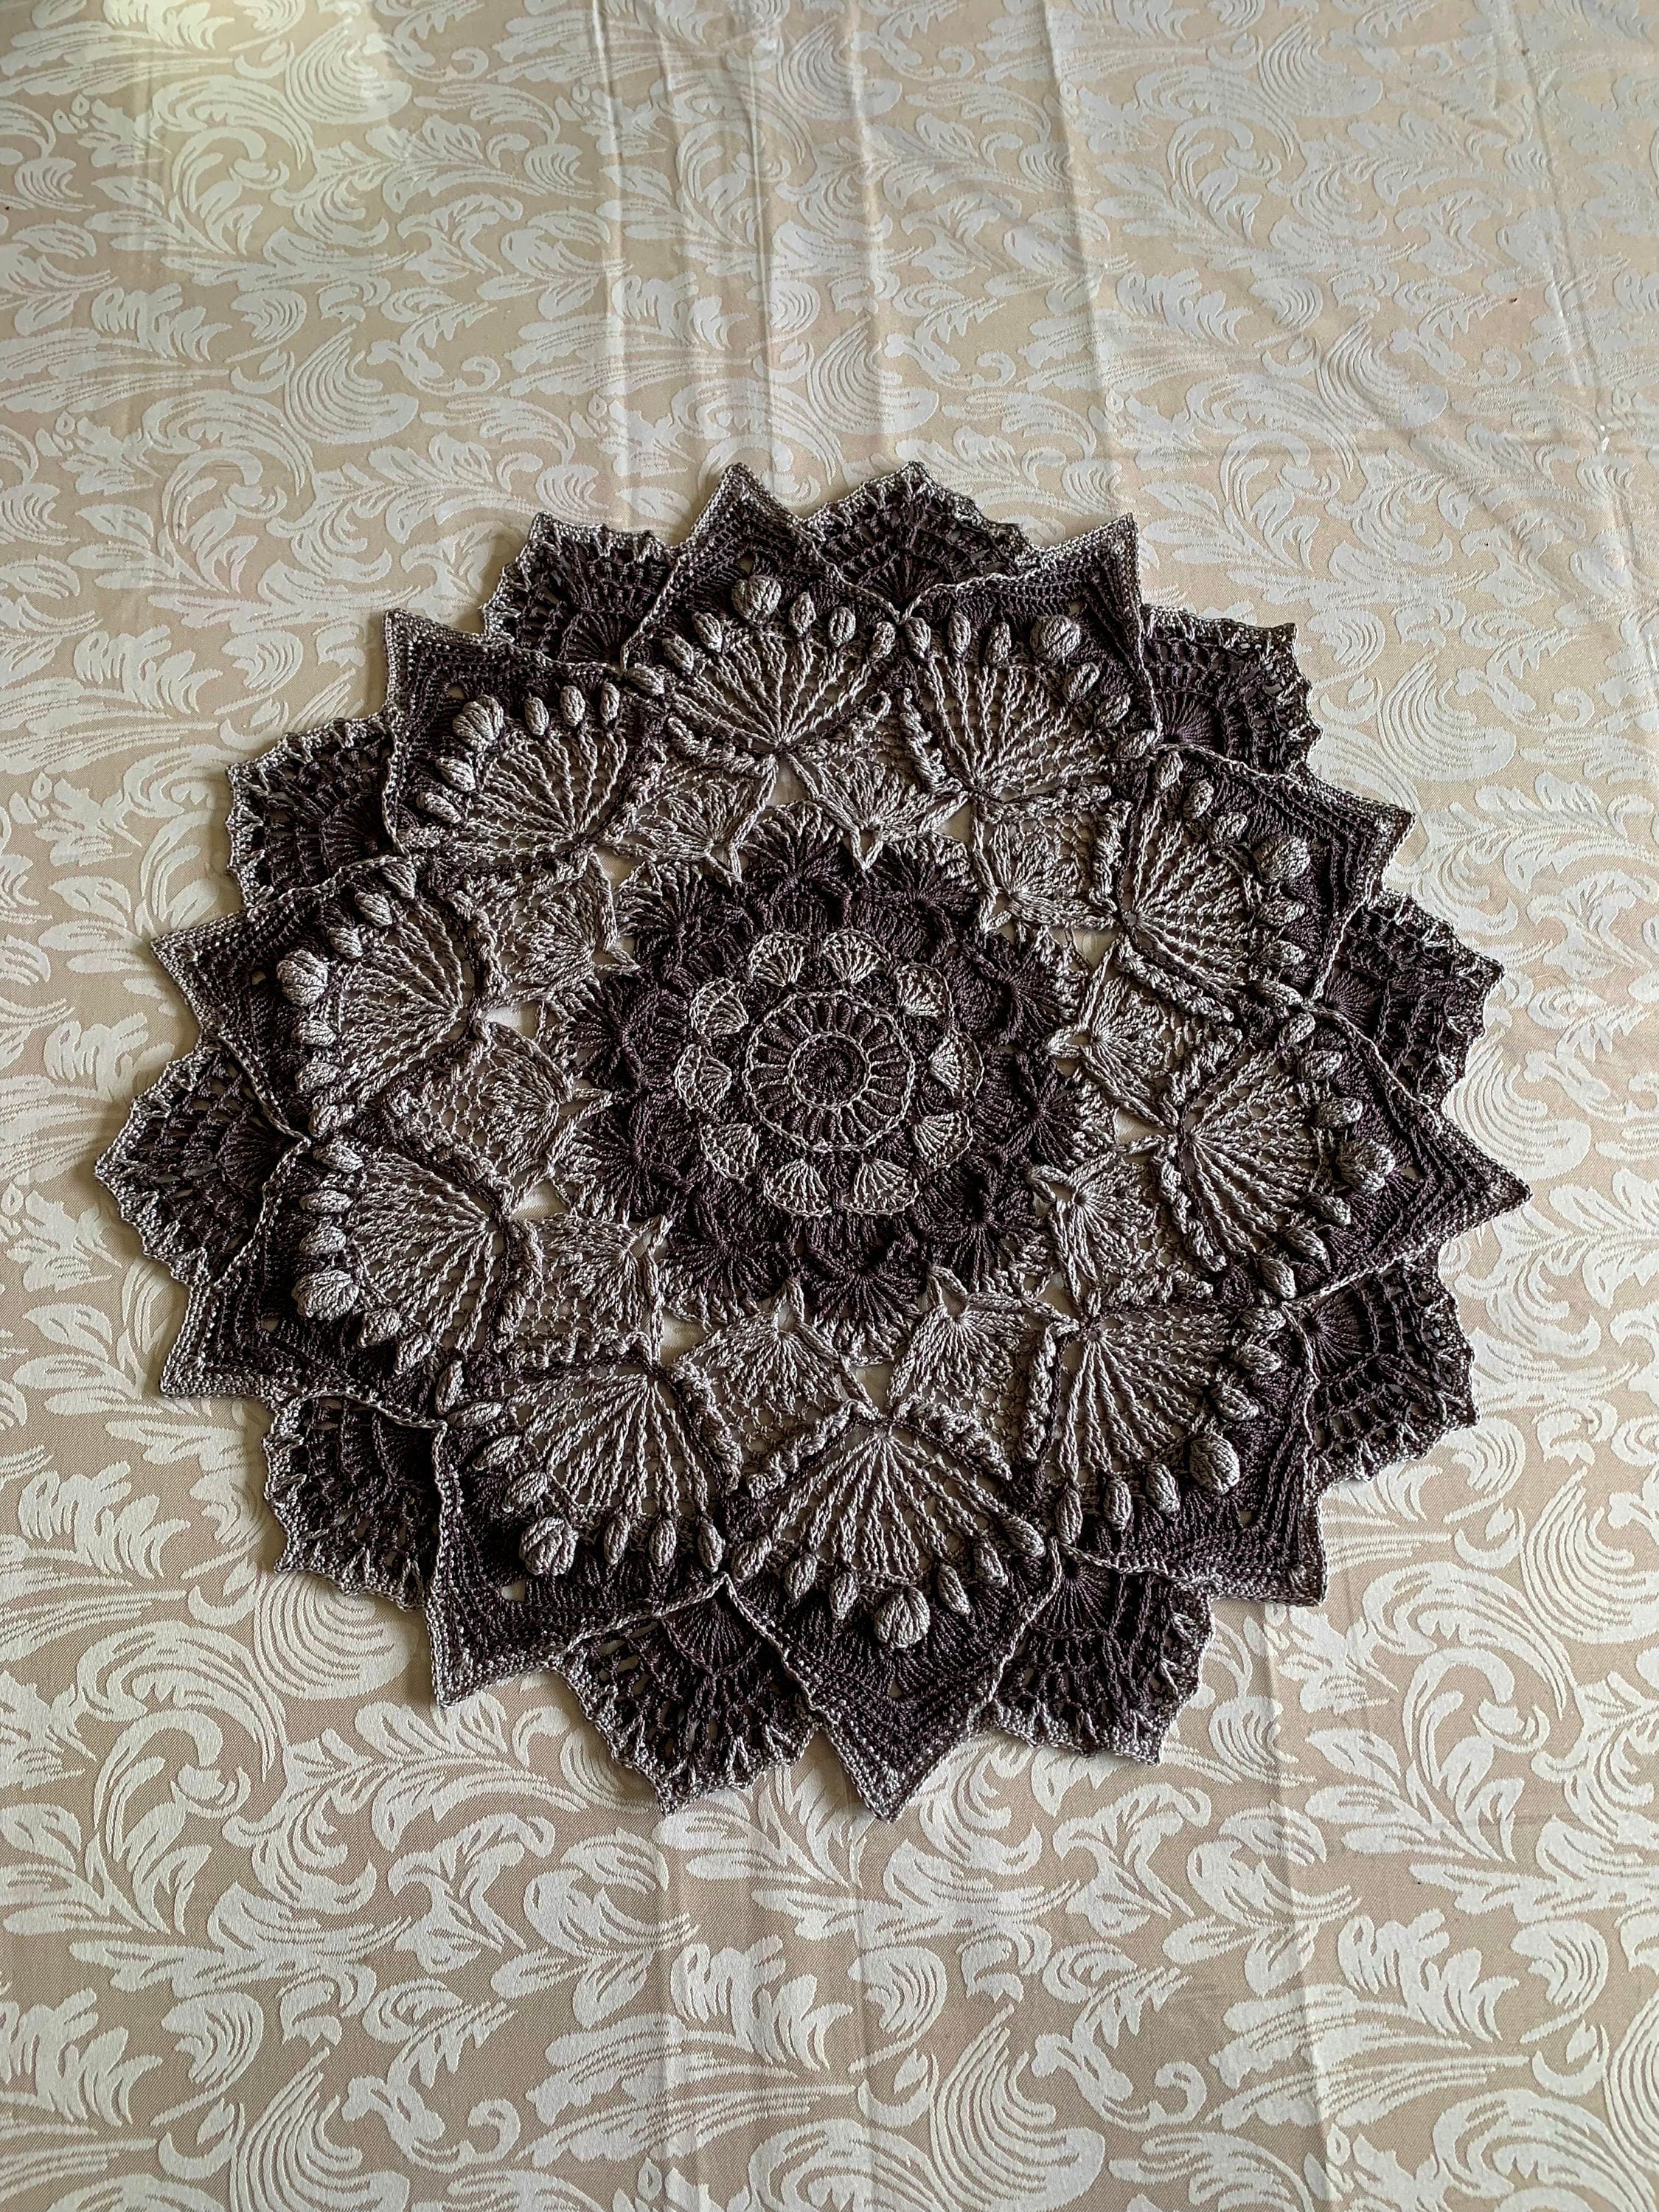 18” Textured Crochet Doily-Two tone Gray-One-of-a-kind Crochet Doily-Heirloom Doily